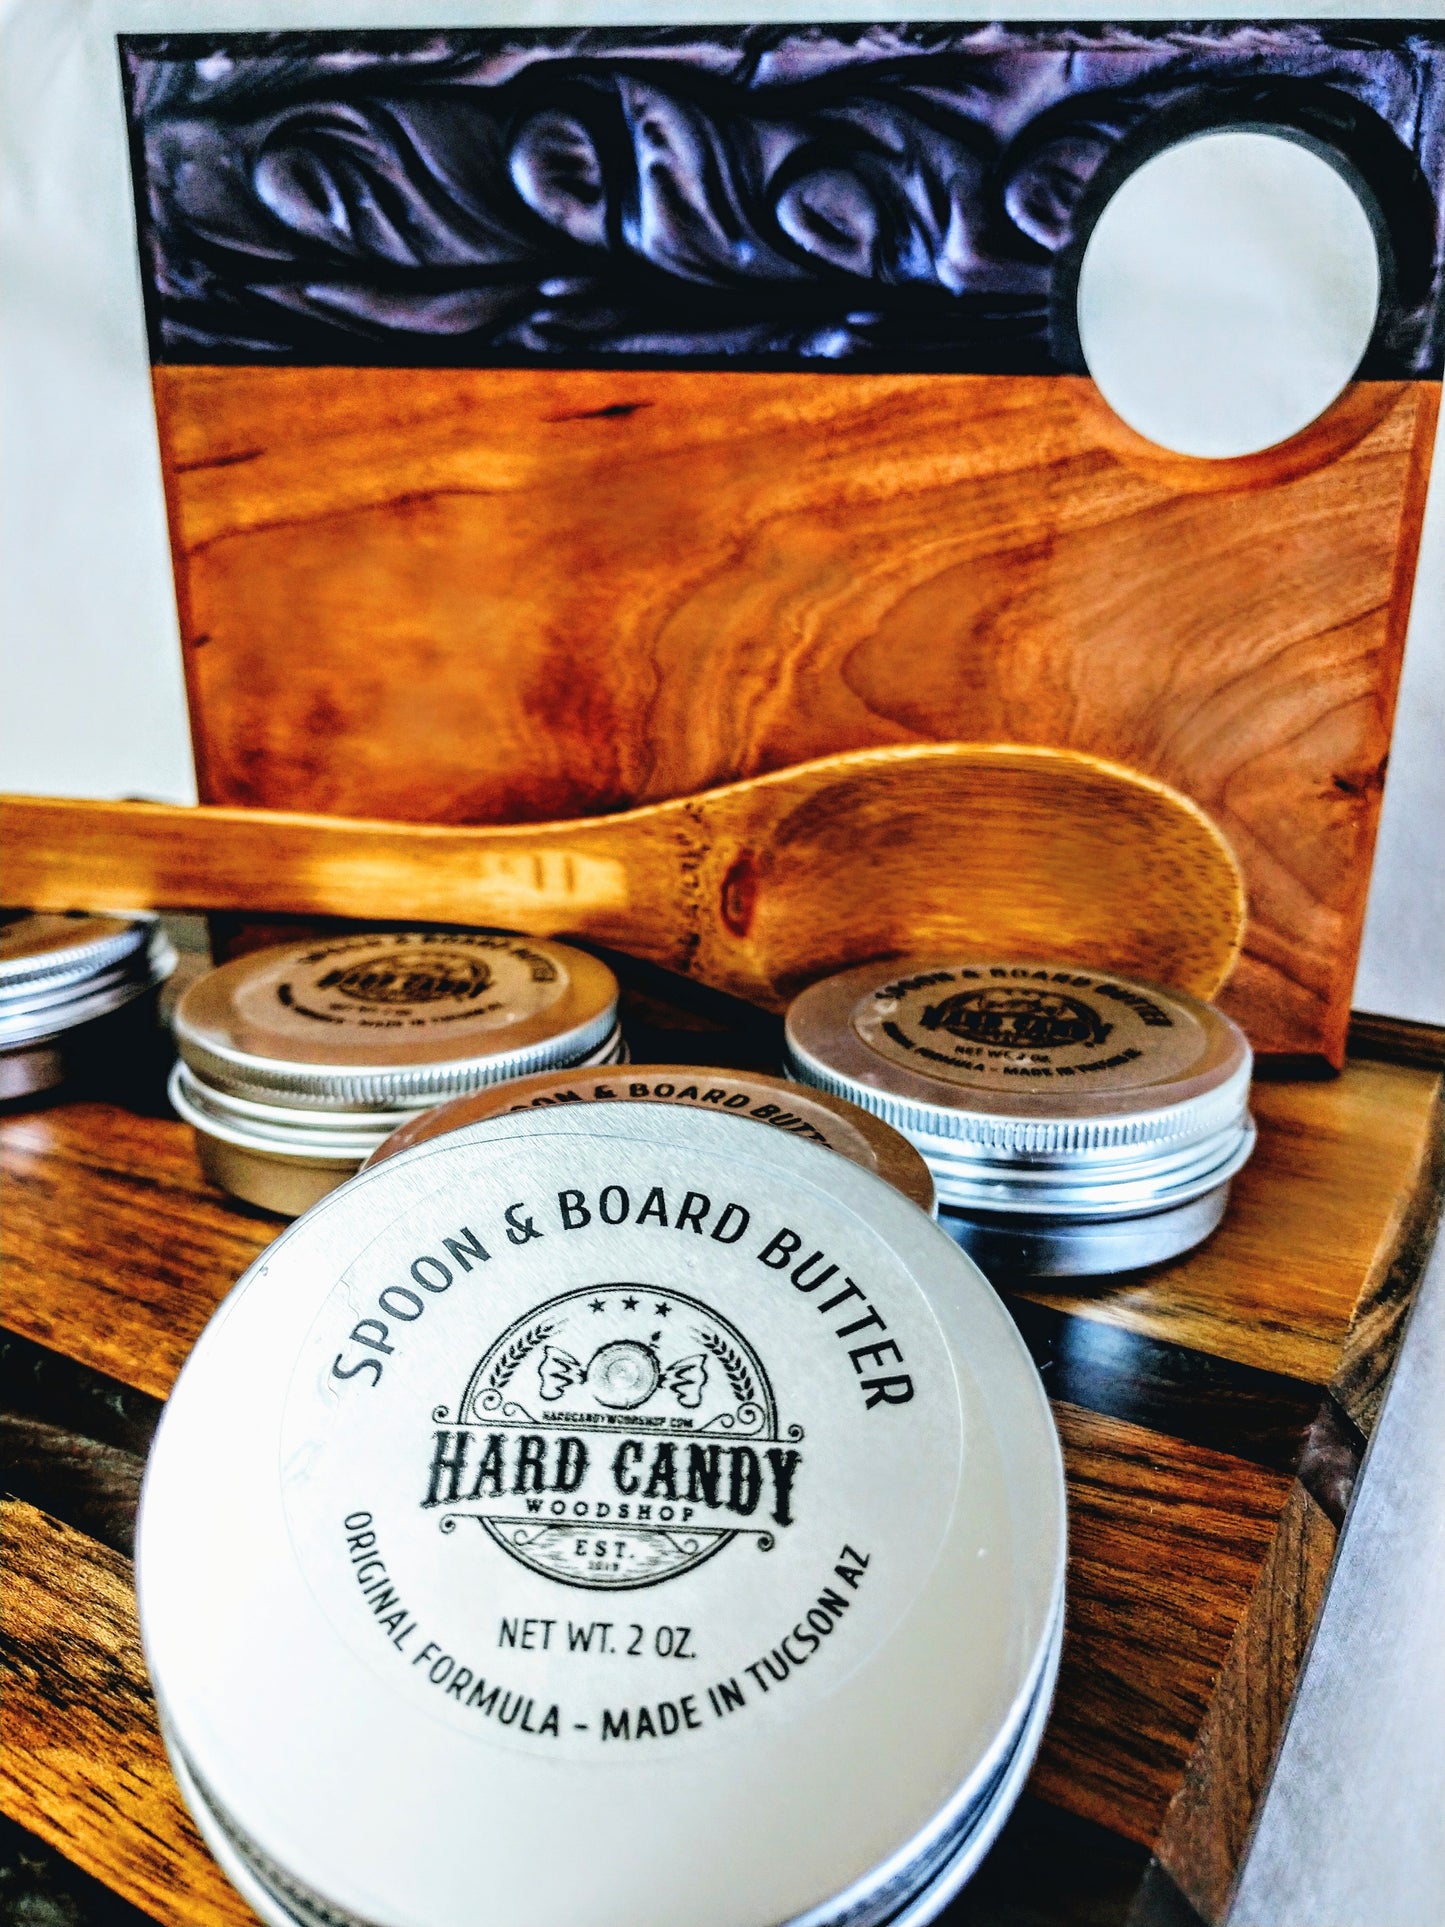 Spoon And Board Butter / Original Honey Formula - Hard Candy Woodshop